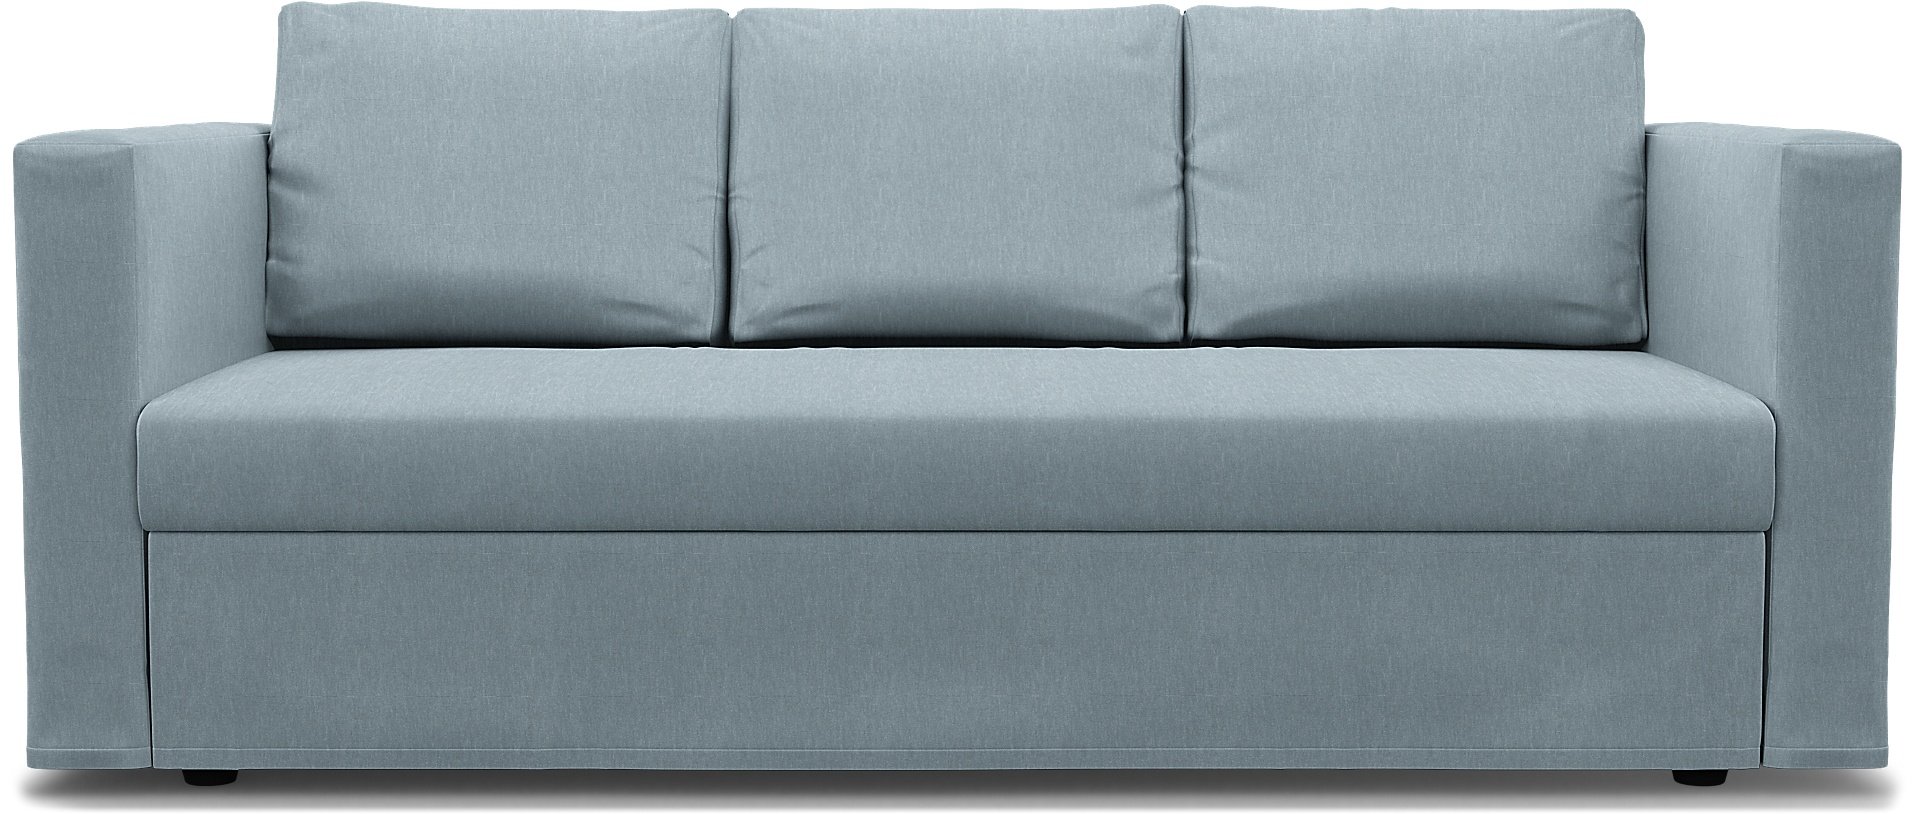 IKEA - Friheten 3 Seater Sofa Bed Cover, Dusty Blue, Linen - Bemz